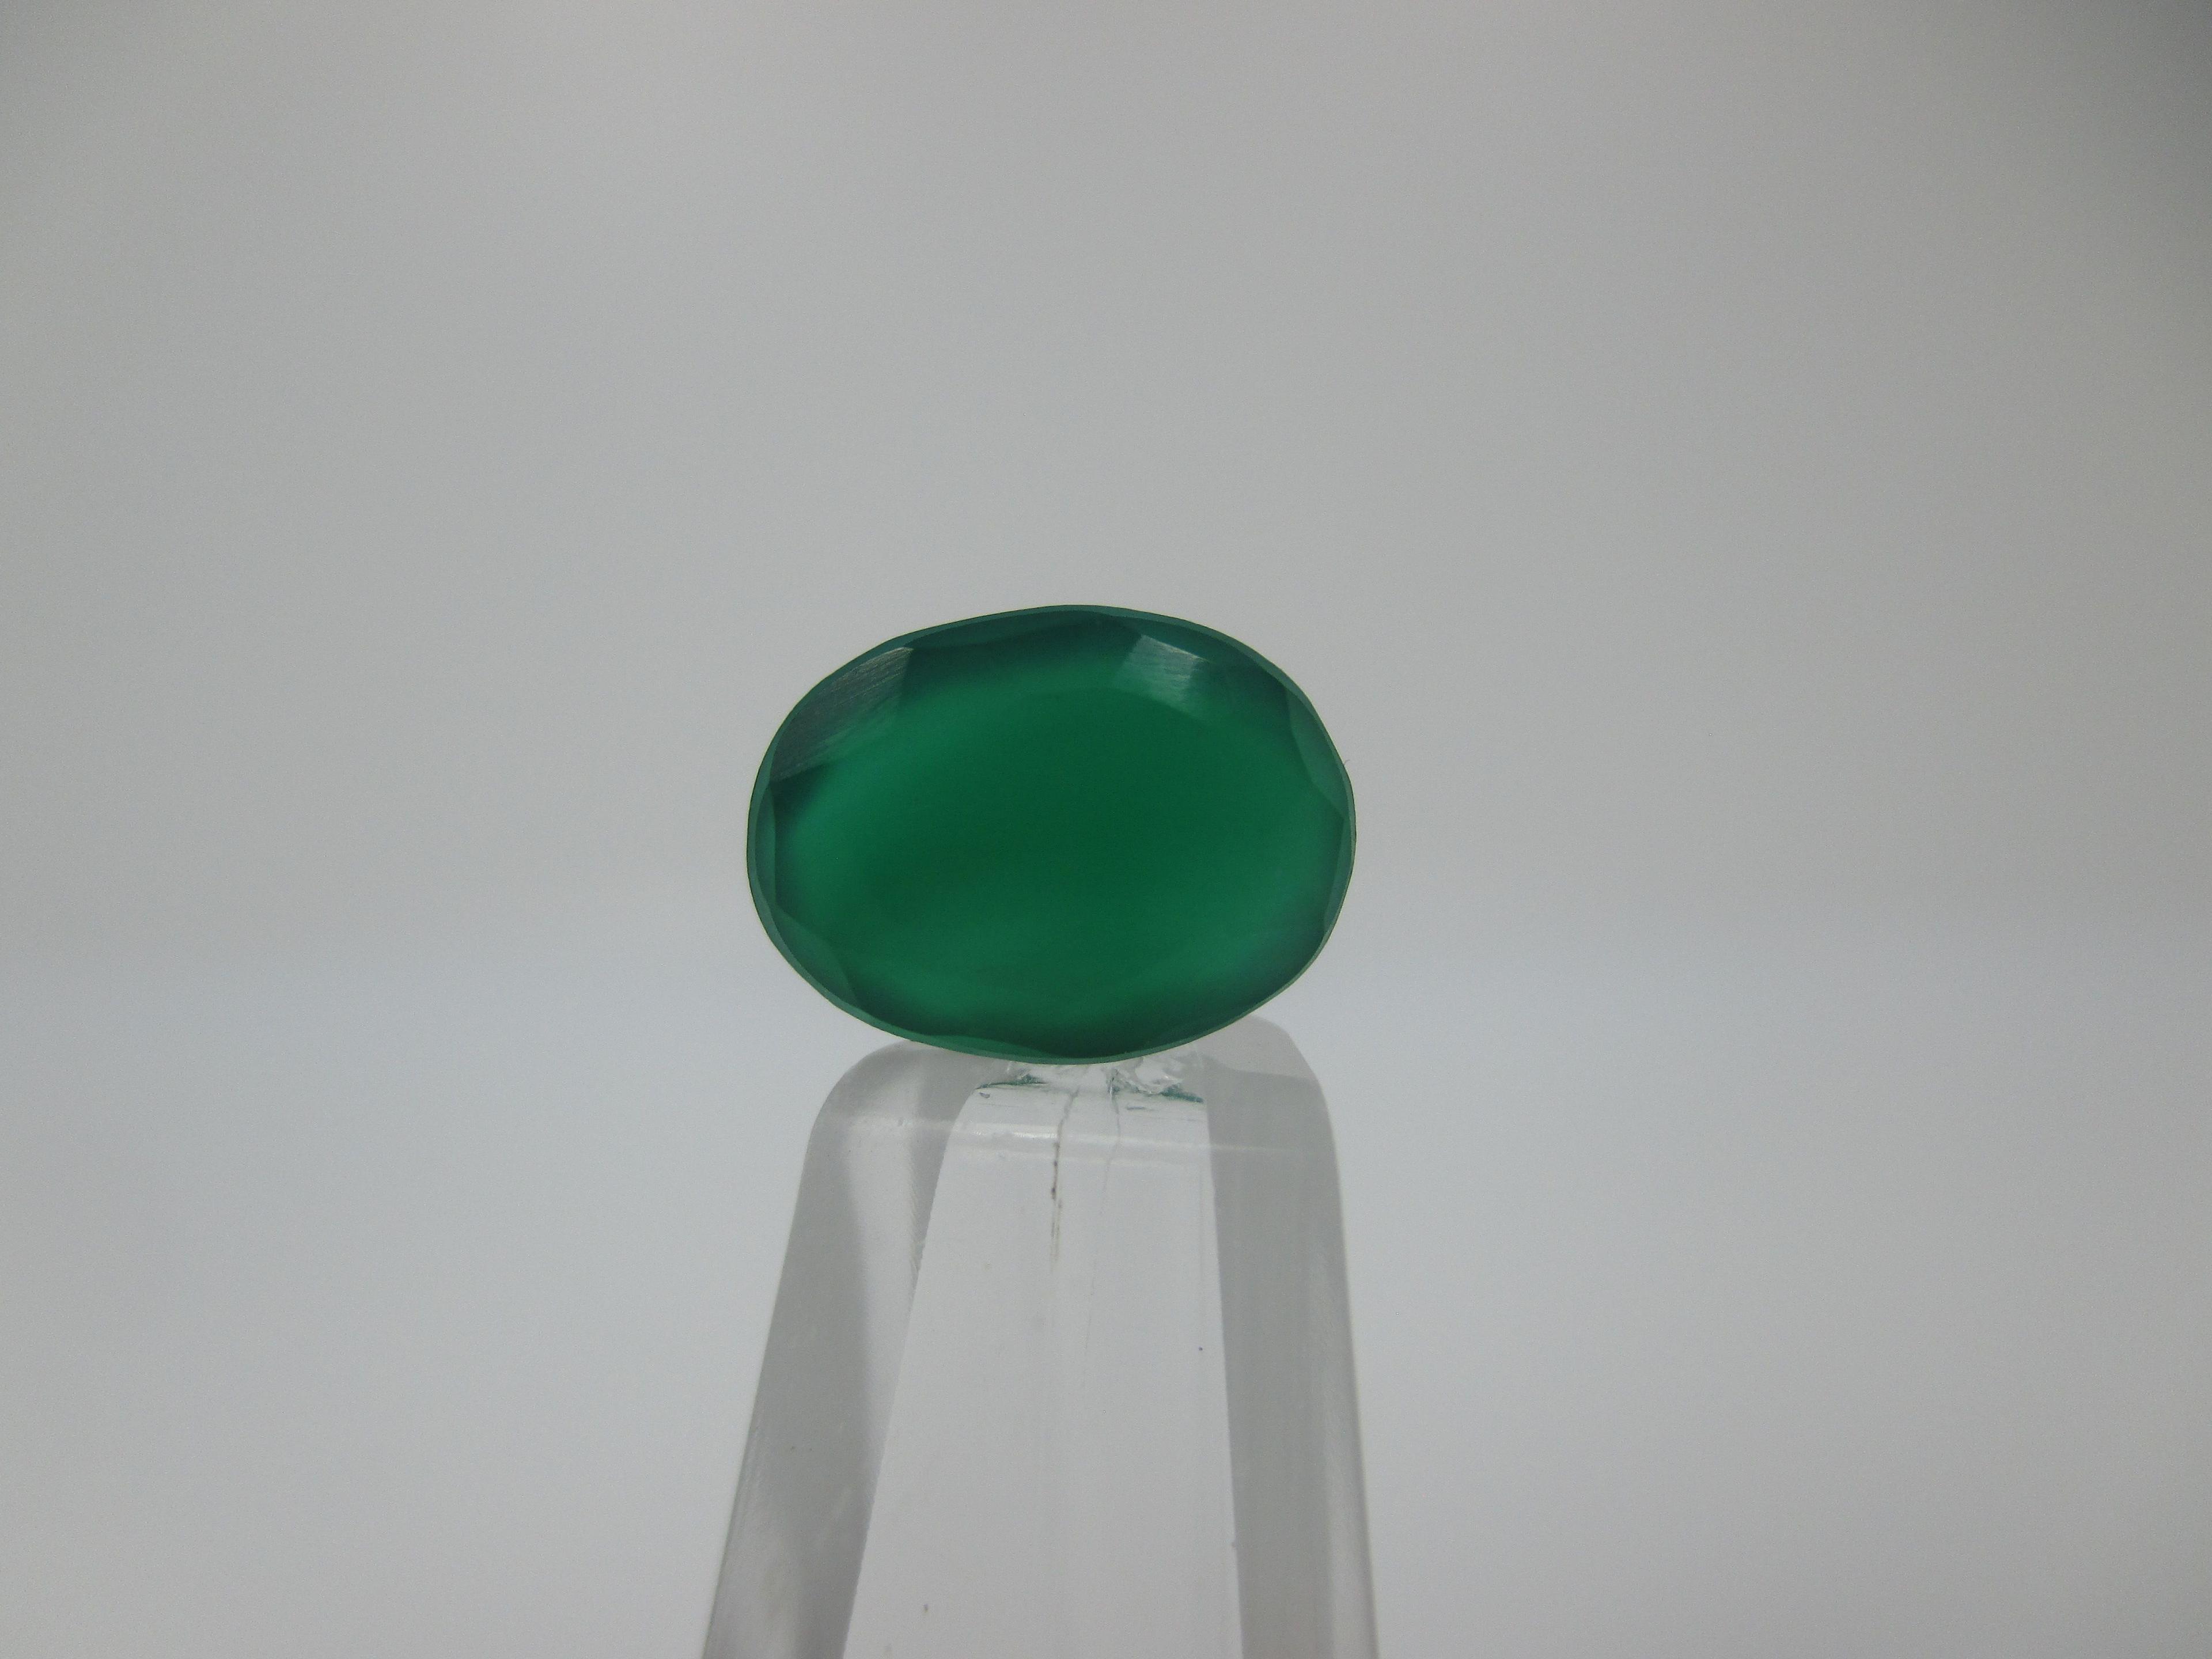 t-16 2.98 Carat Oval Cut Green Onyx Gemstone GIA Certified